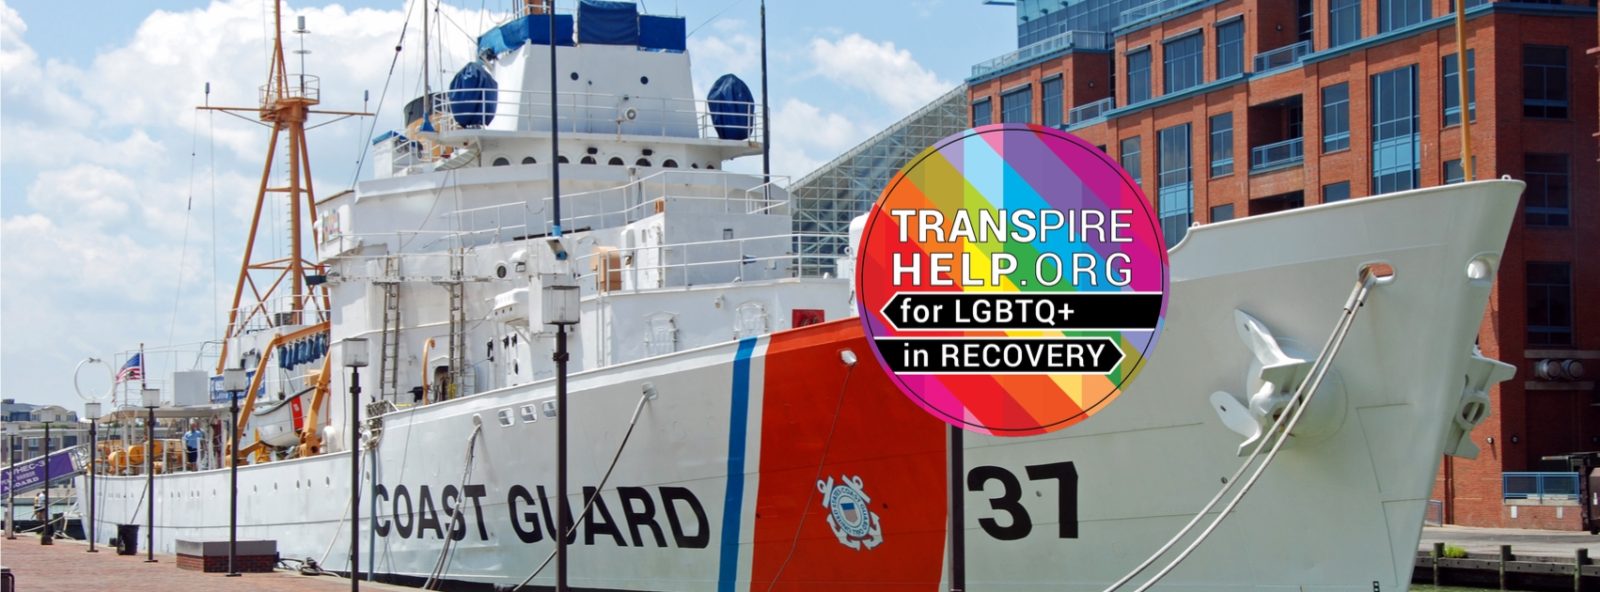 coast guard transgender